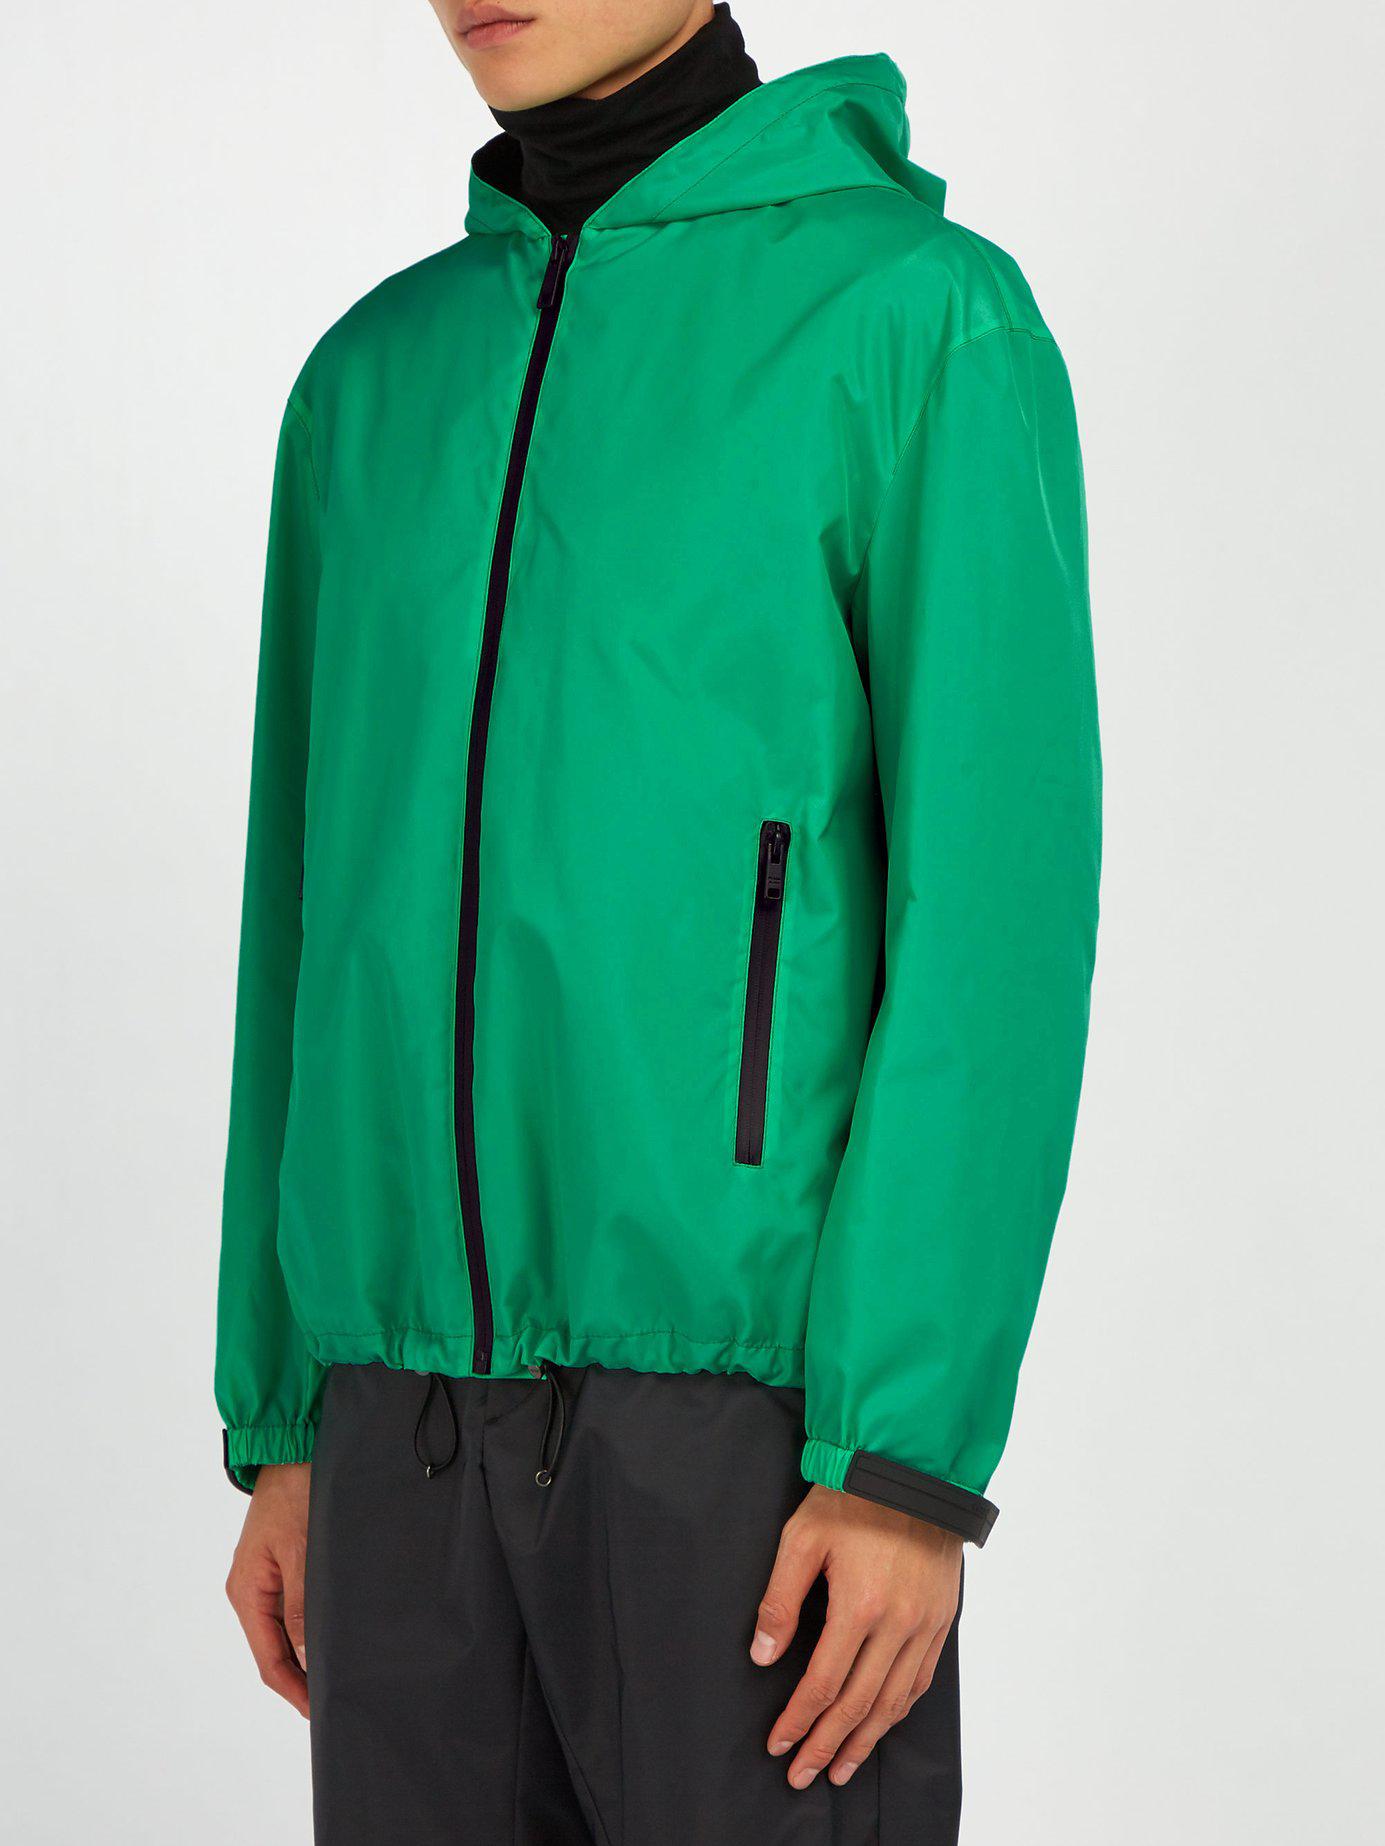 Prada Lightweight Technical Jacket in Green for Men - Lyst